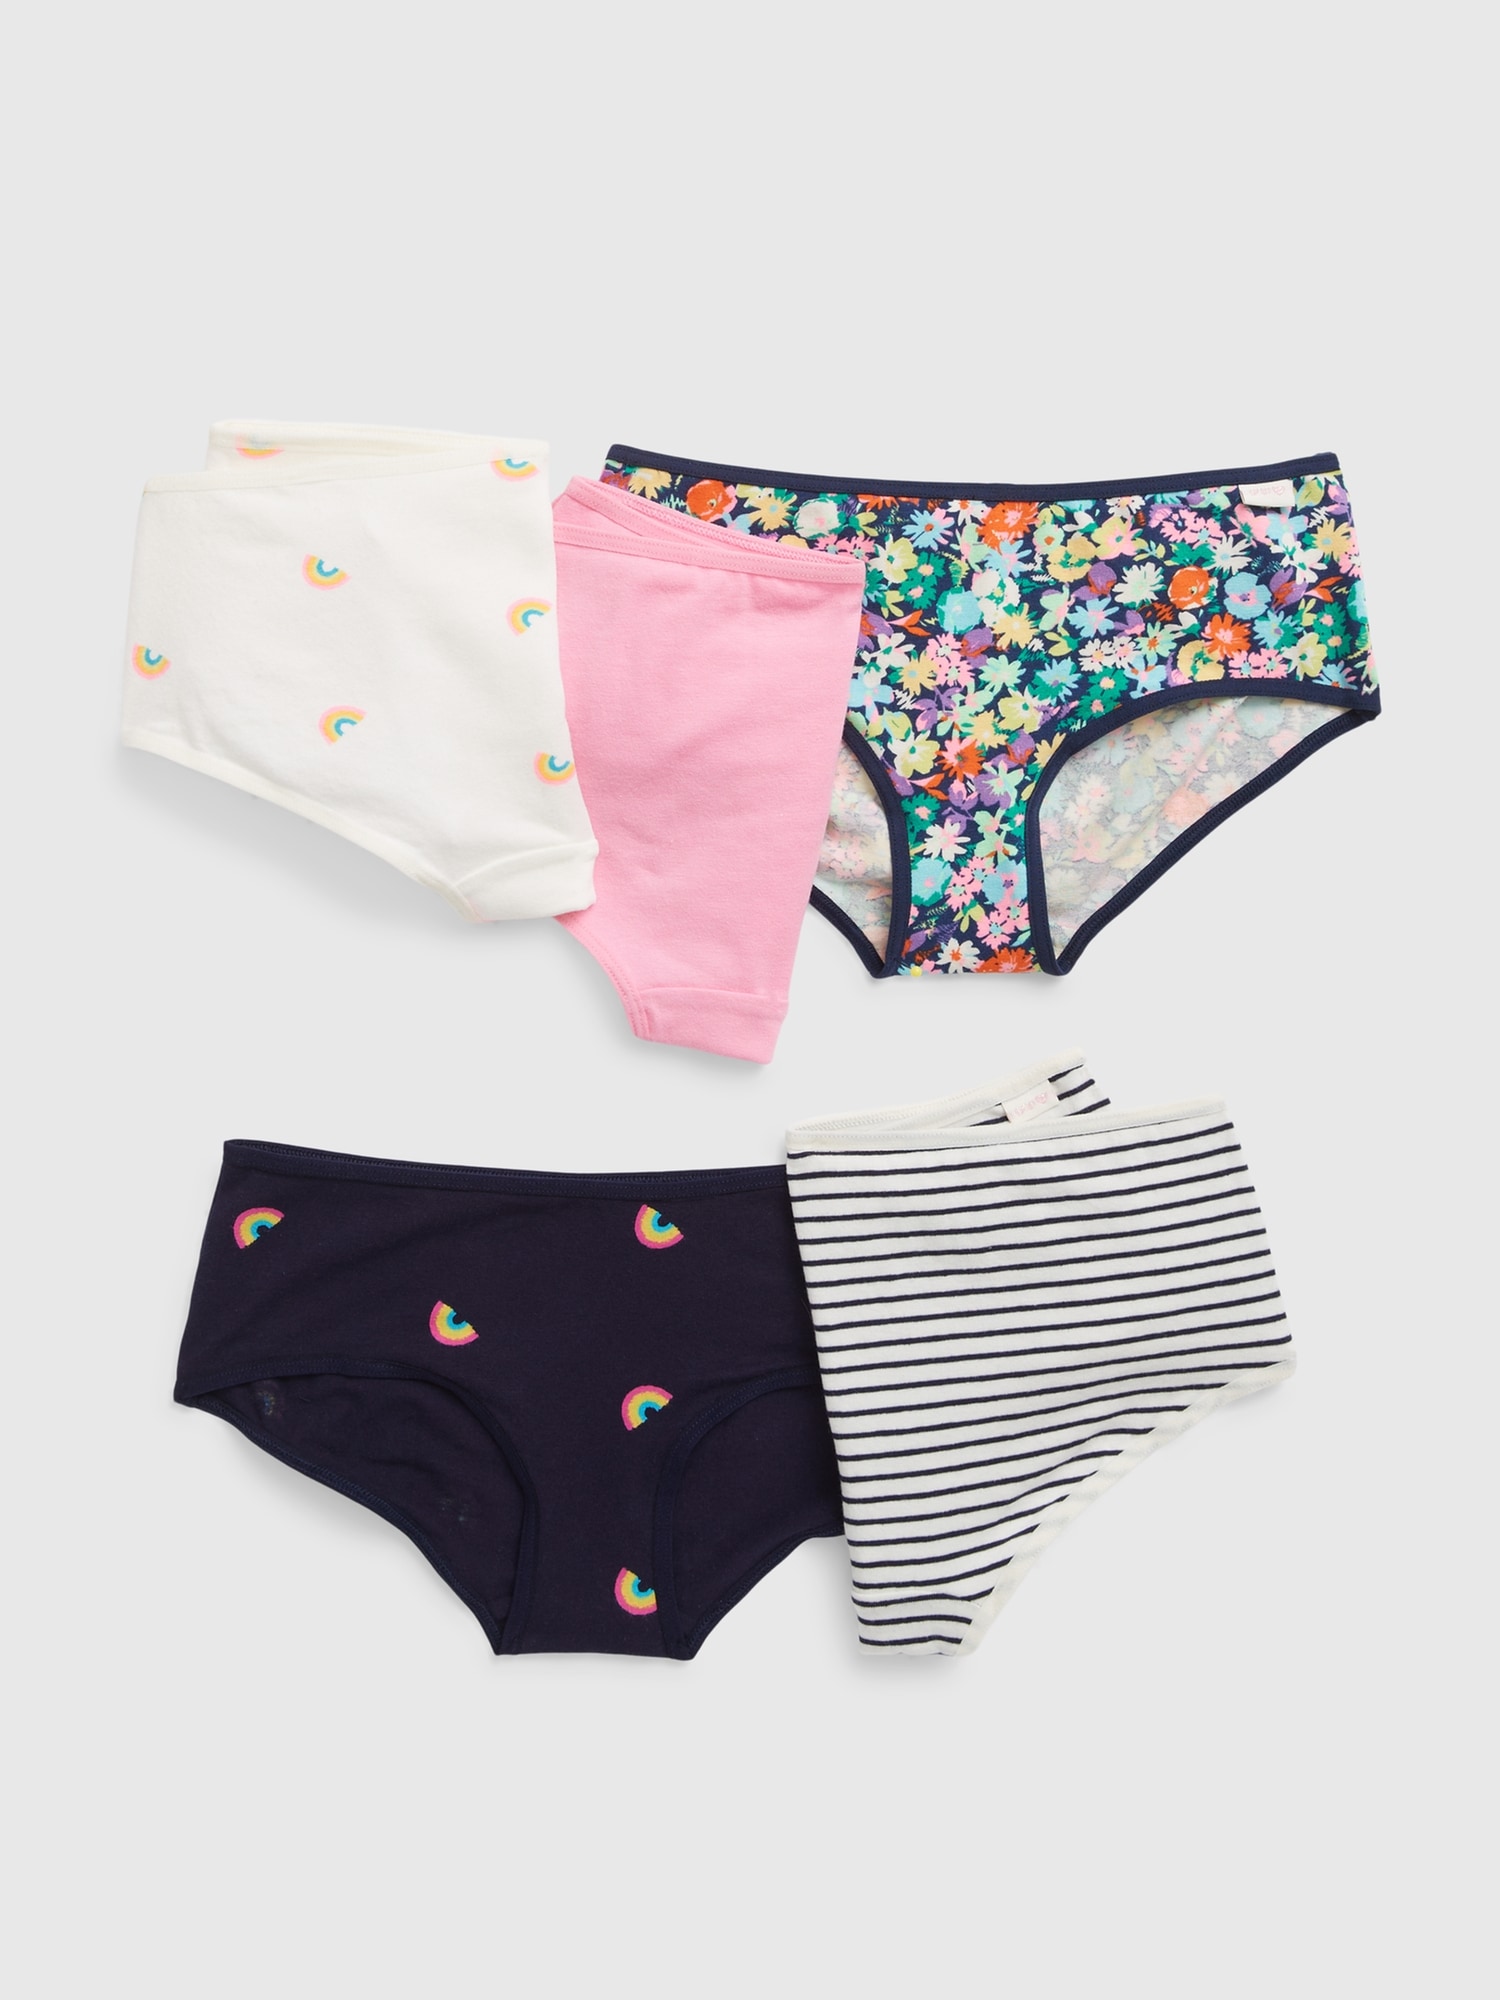 Toddler Girls' Hipster Underwear, Assorted 12 Pack